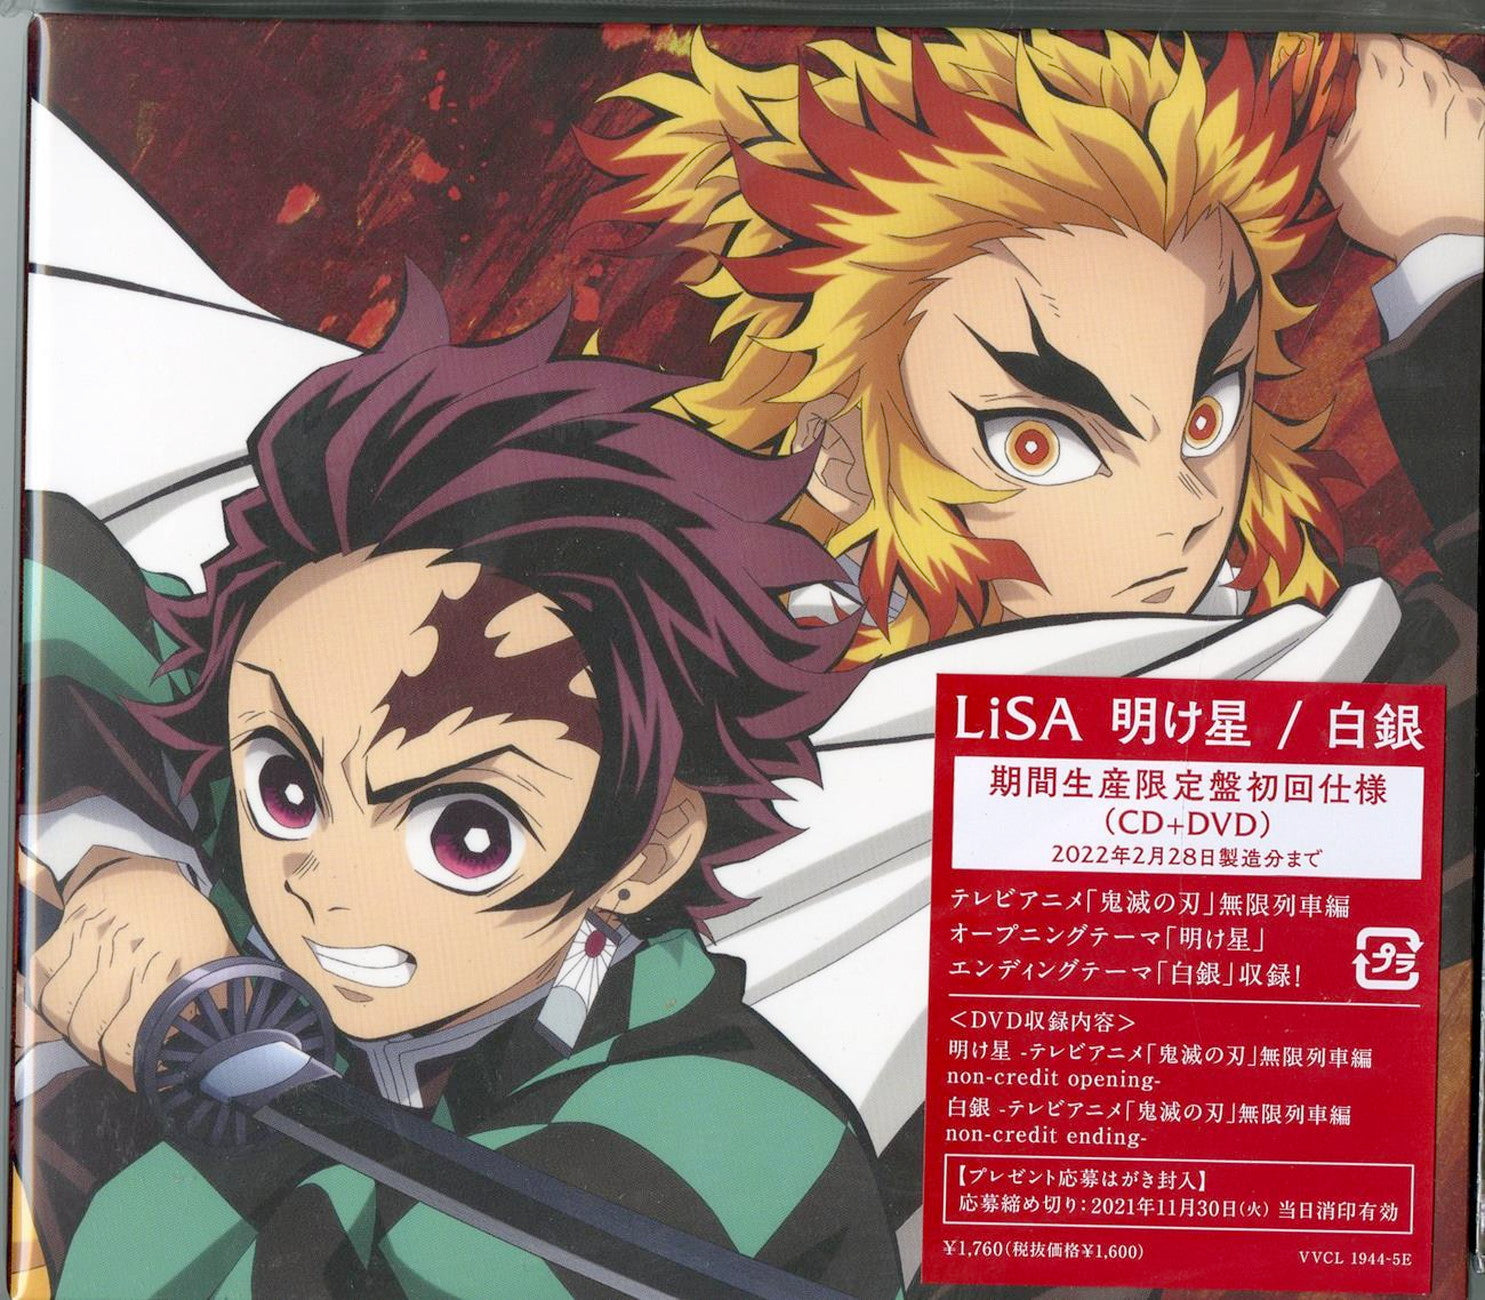 LiSA Gurenge CD&DVD Single Demon Slayer: Kimetsu no Yaiba Opening Theme  Anime